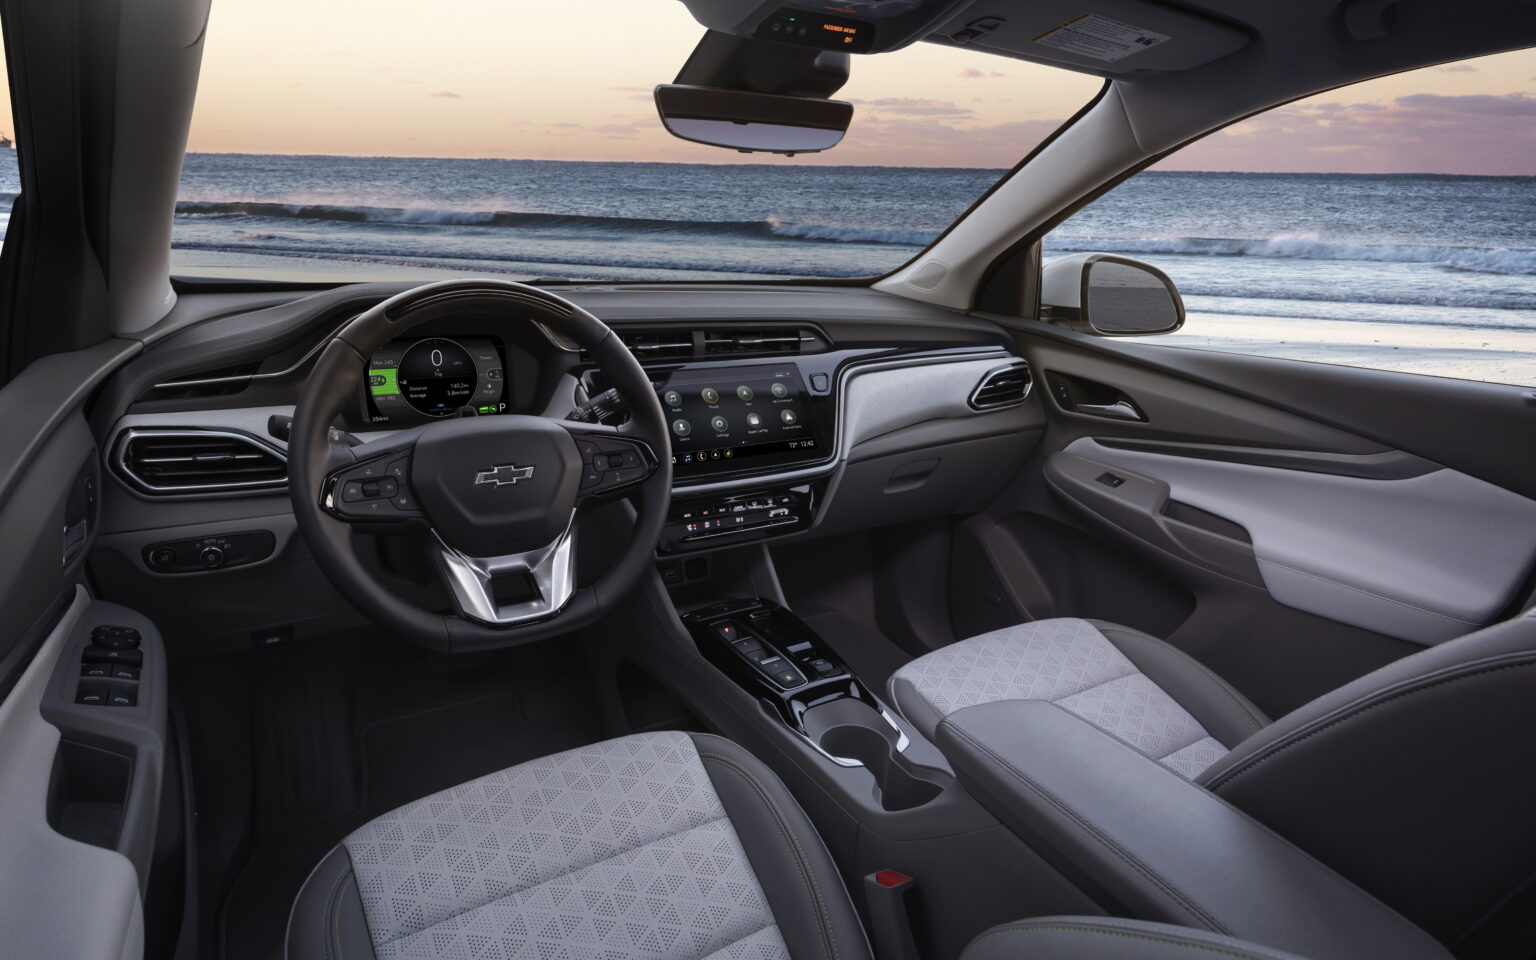 2023 Chevrolet Bolt EV/EUV Q3 2023 Sales Interior Image 2